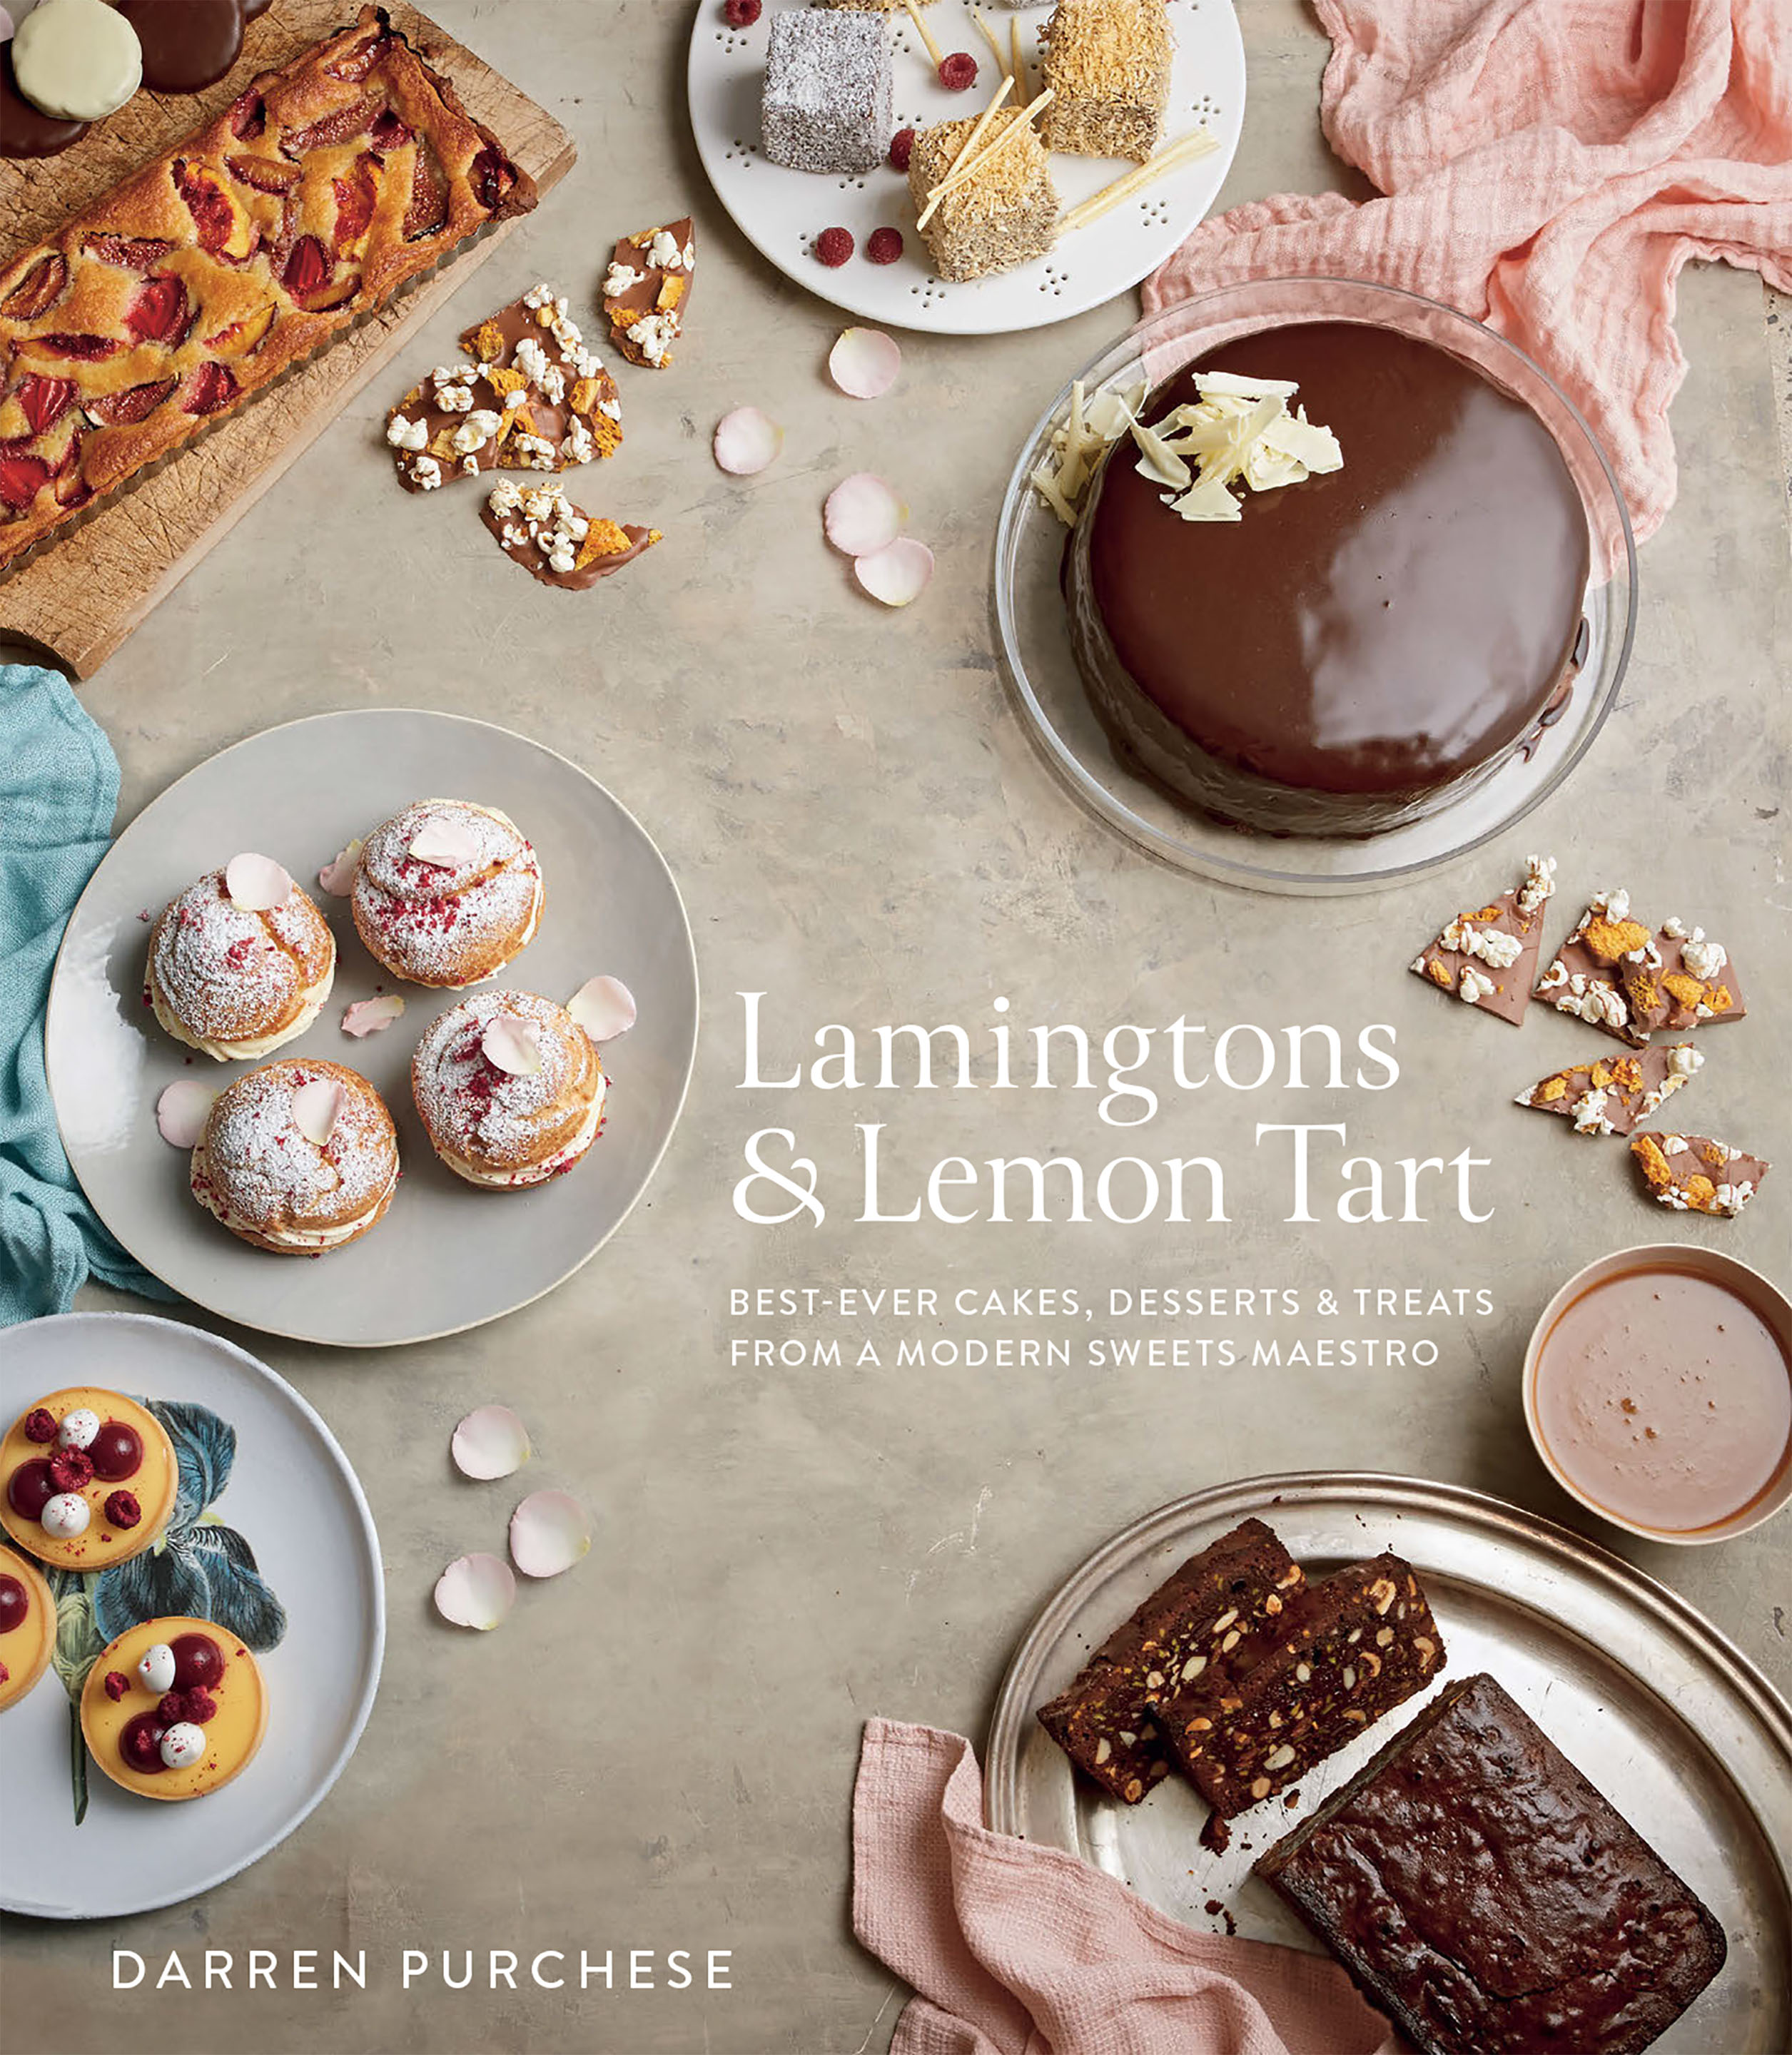 Lamingtons & lemon tart